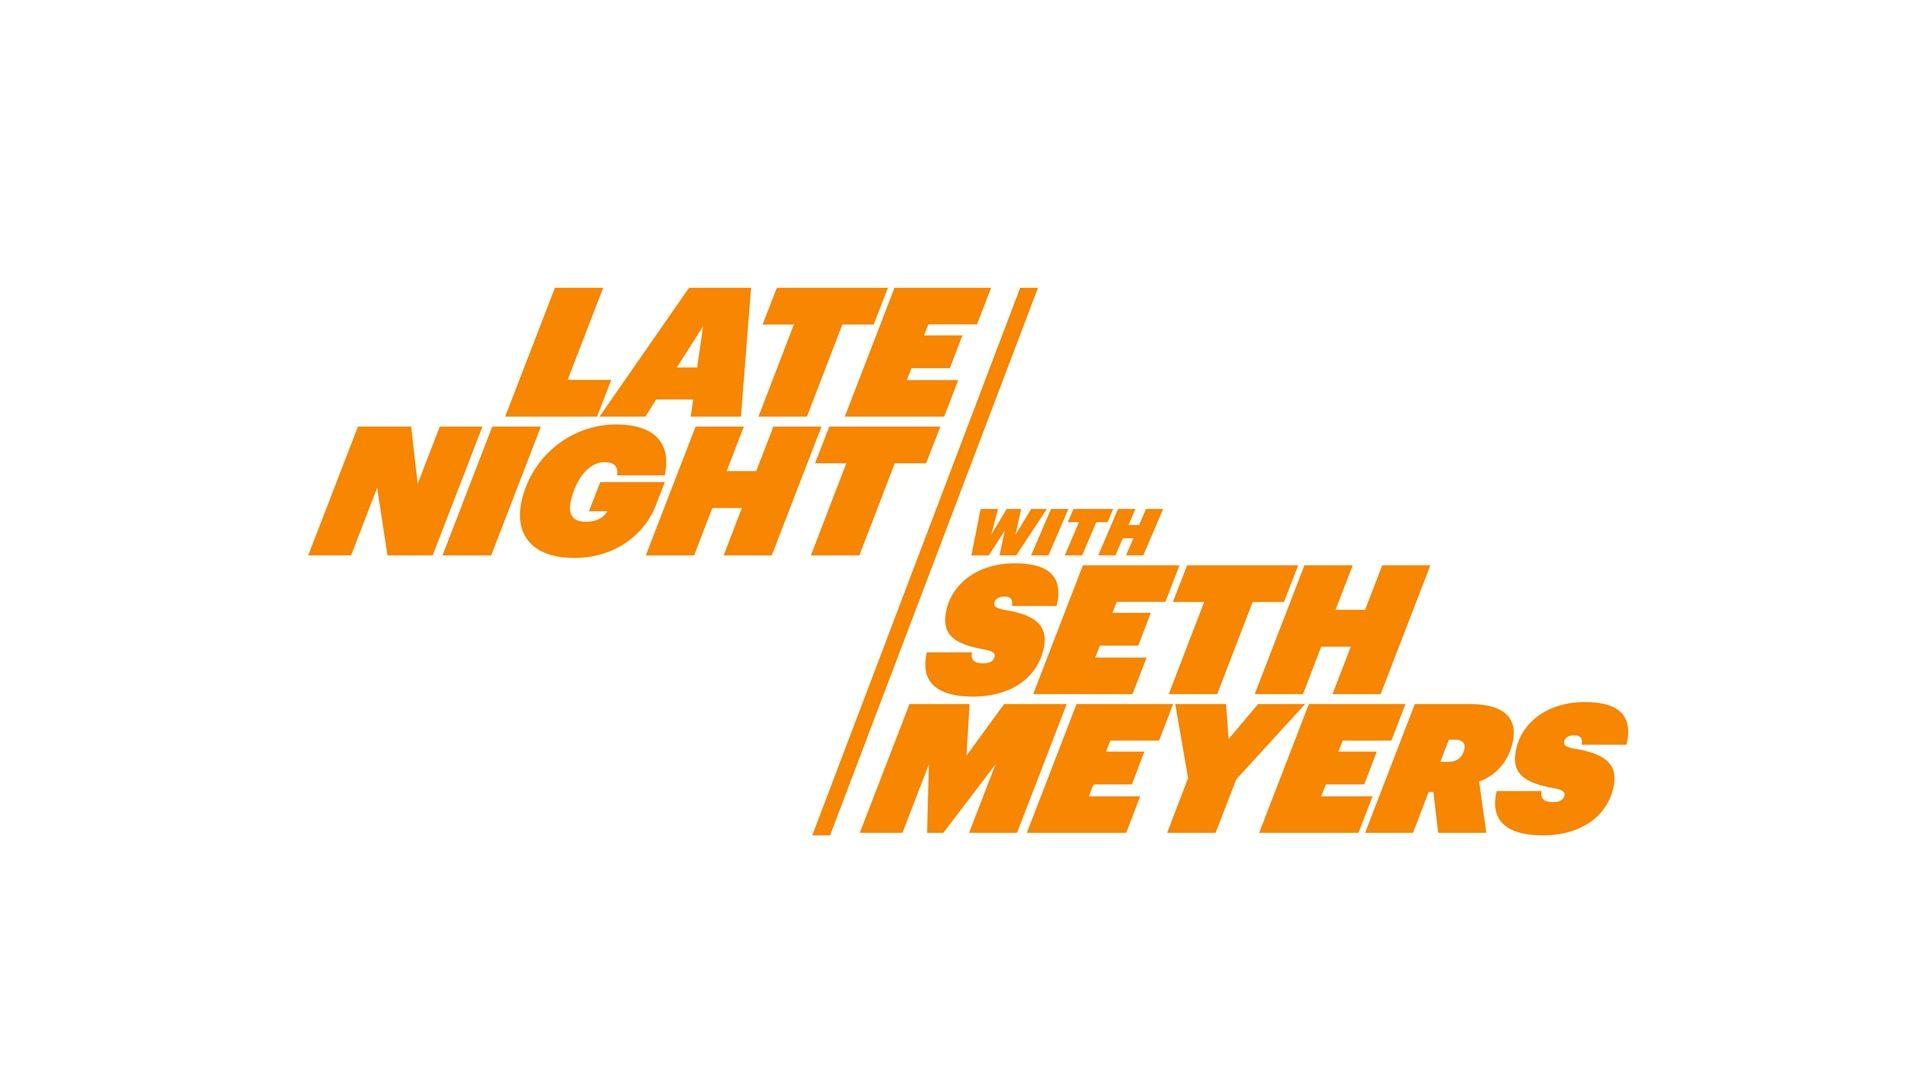 NBC Today Show Logo - Late Night with Seth Meyers - NBC.com